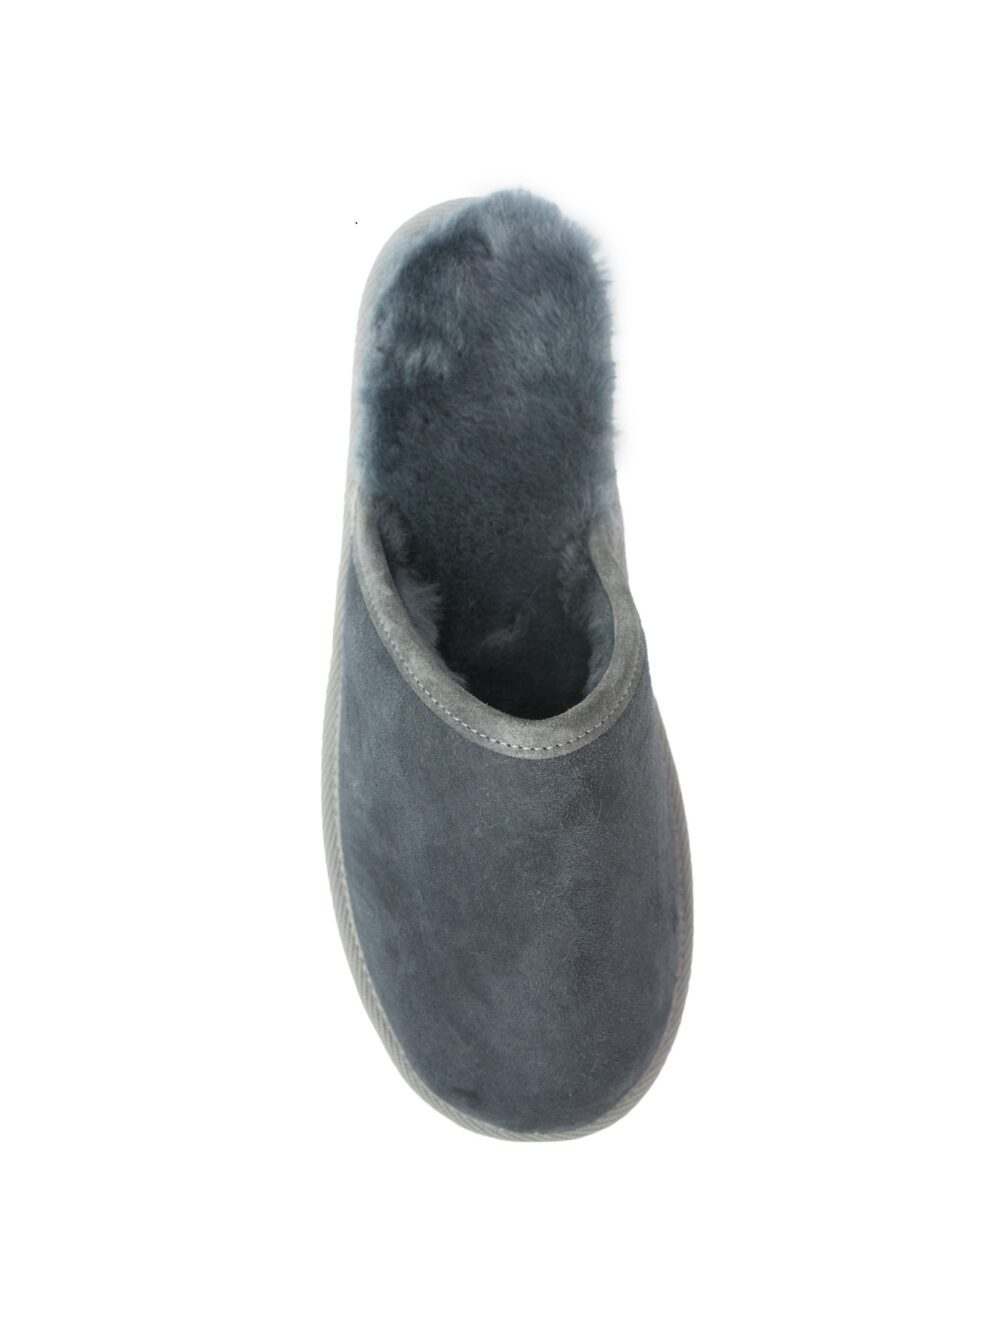 Men’s slippers Caldor Grey Accessories Producent owczych skór dekoracyjnych | Tannery Sheepskin | KalSkór 5